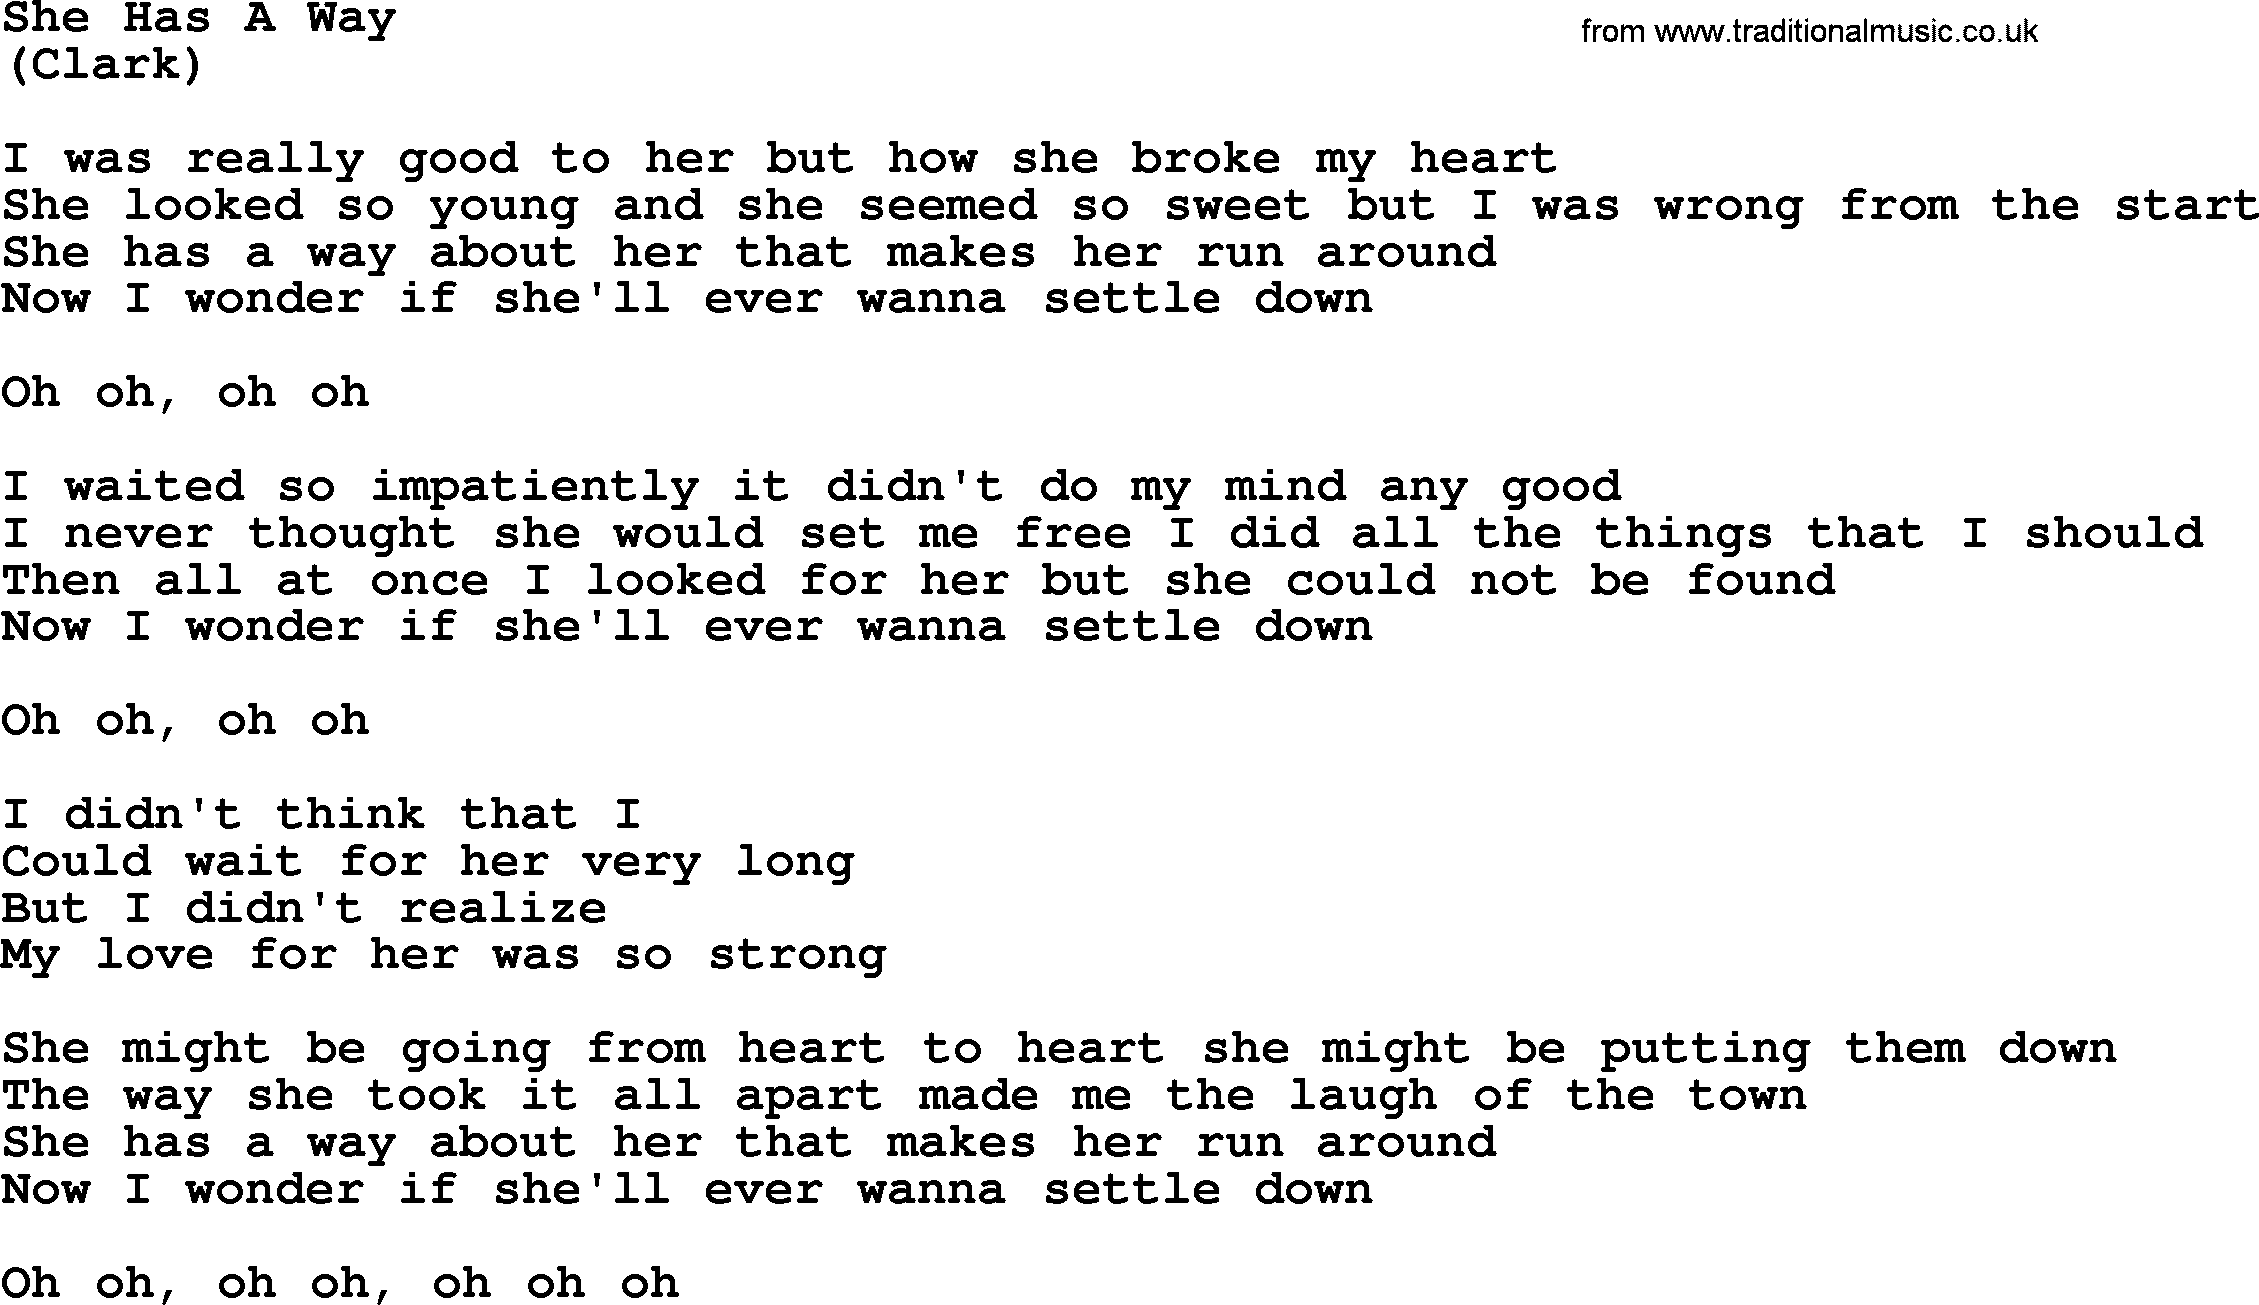 The Byrds song She Has A Way, lyrics